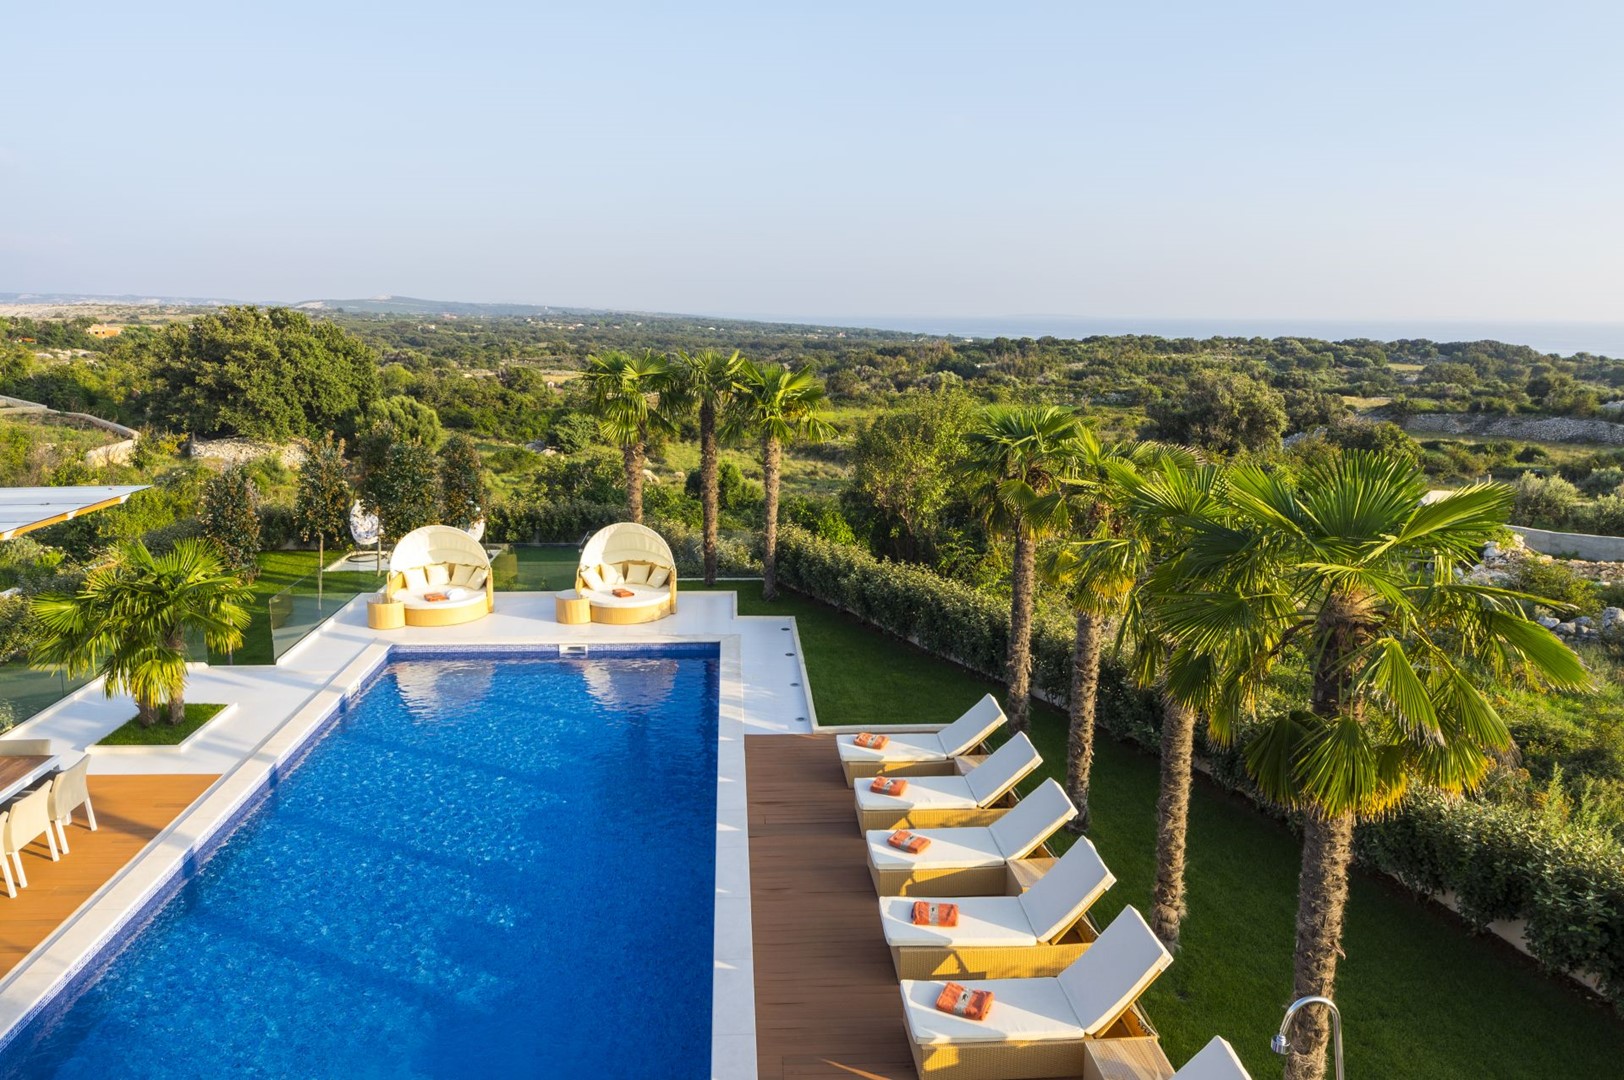 PAG LUXURY VILLAS - Luxury Villa Hidden Hills Pag with pool